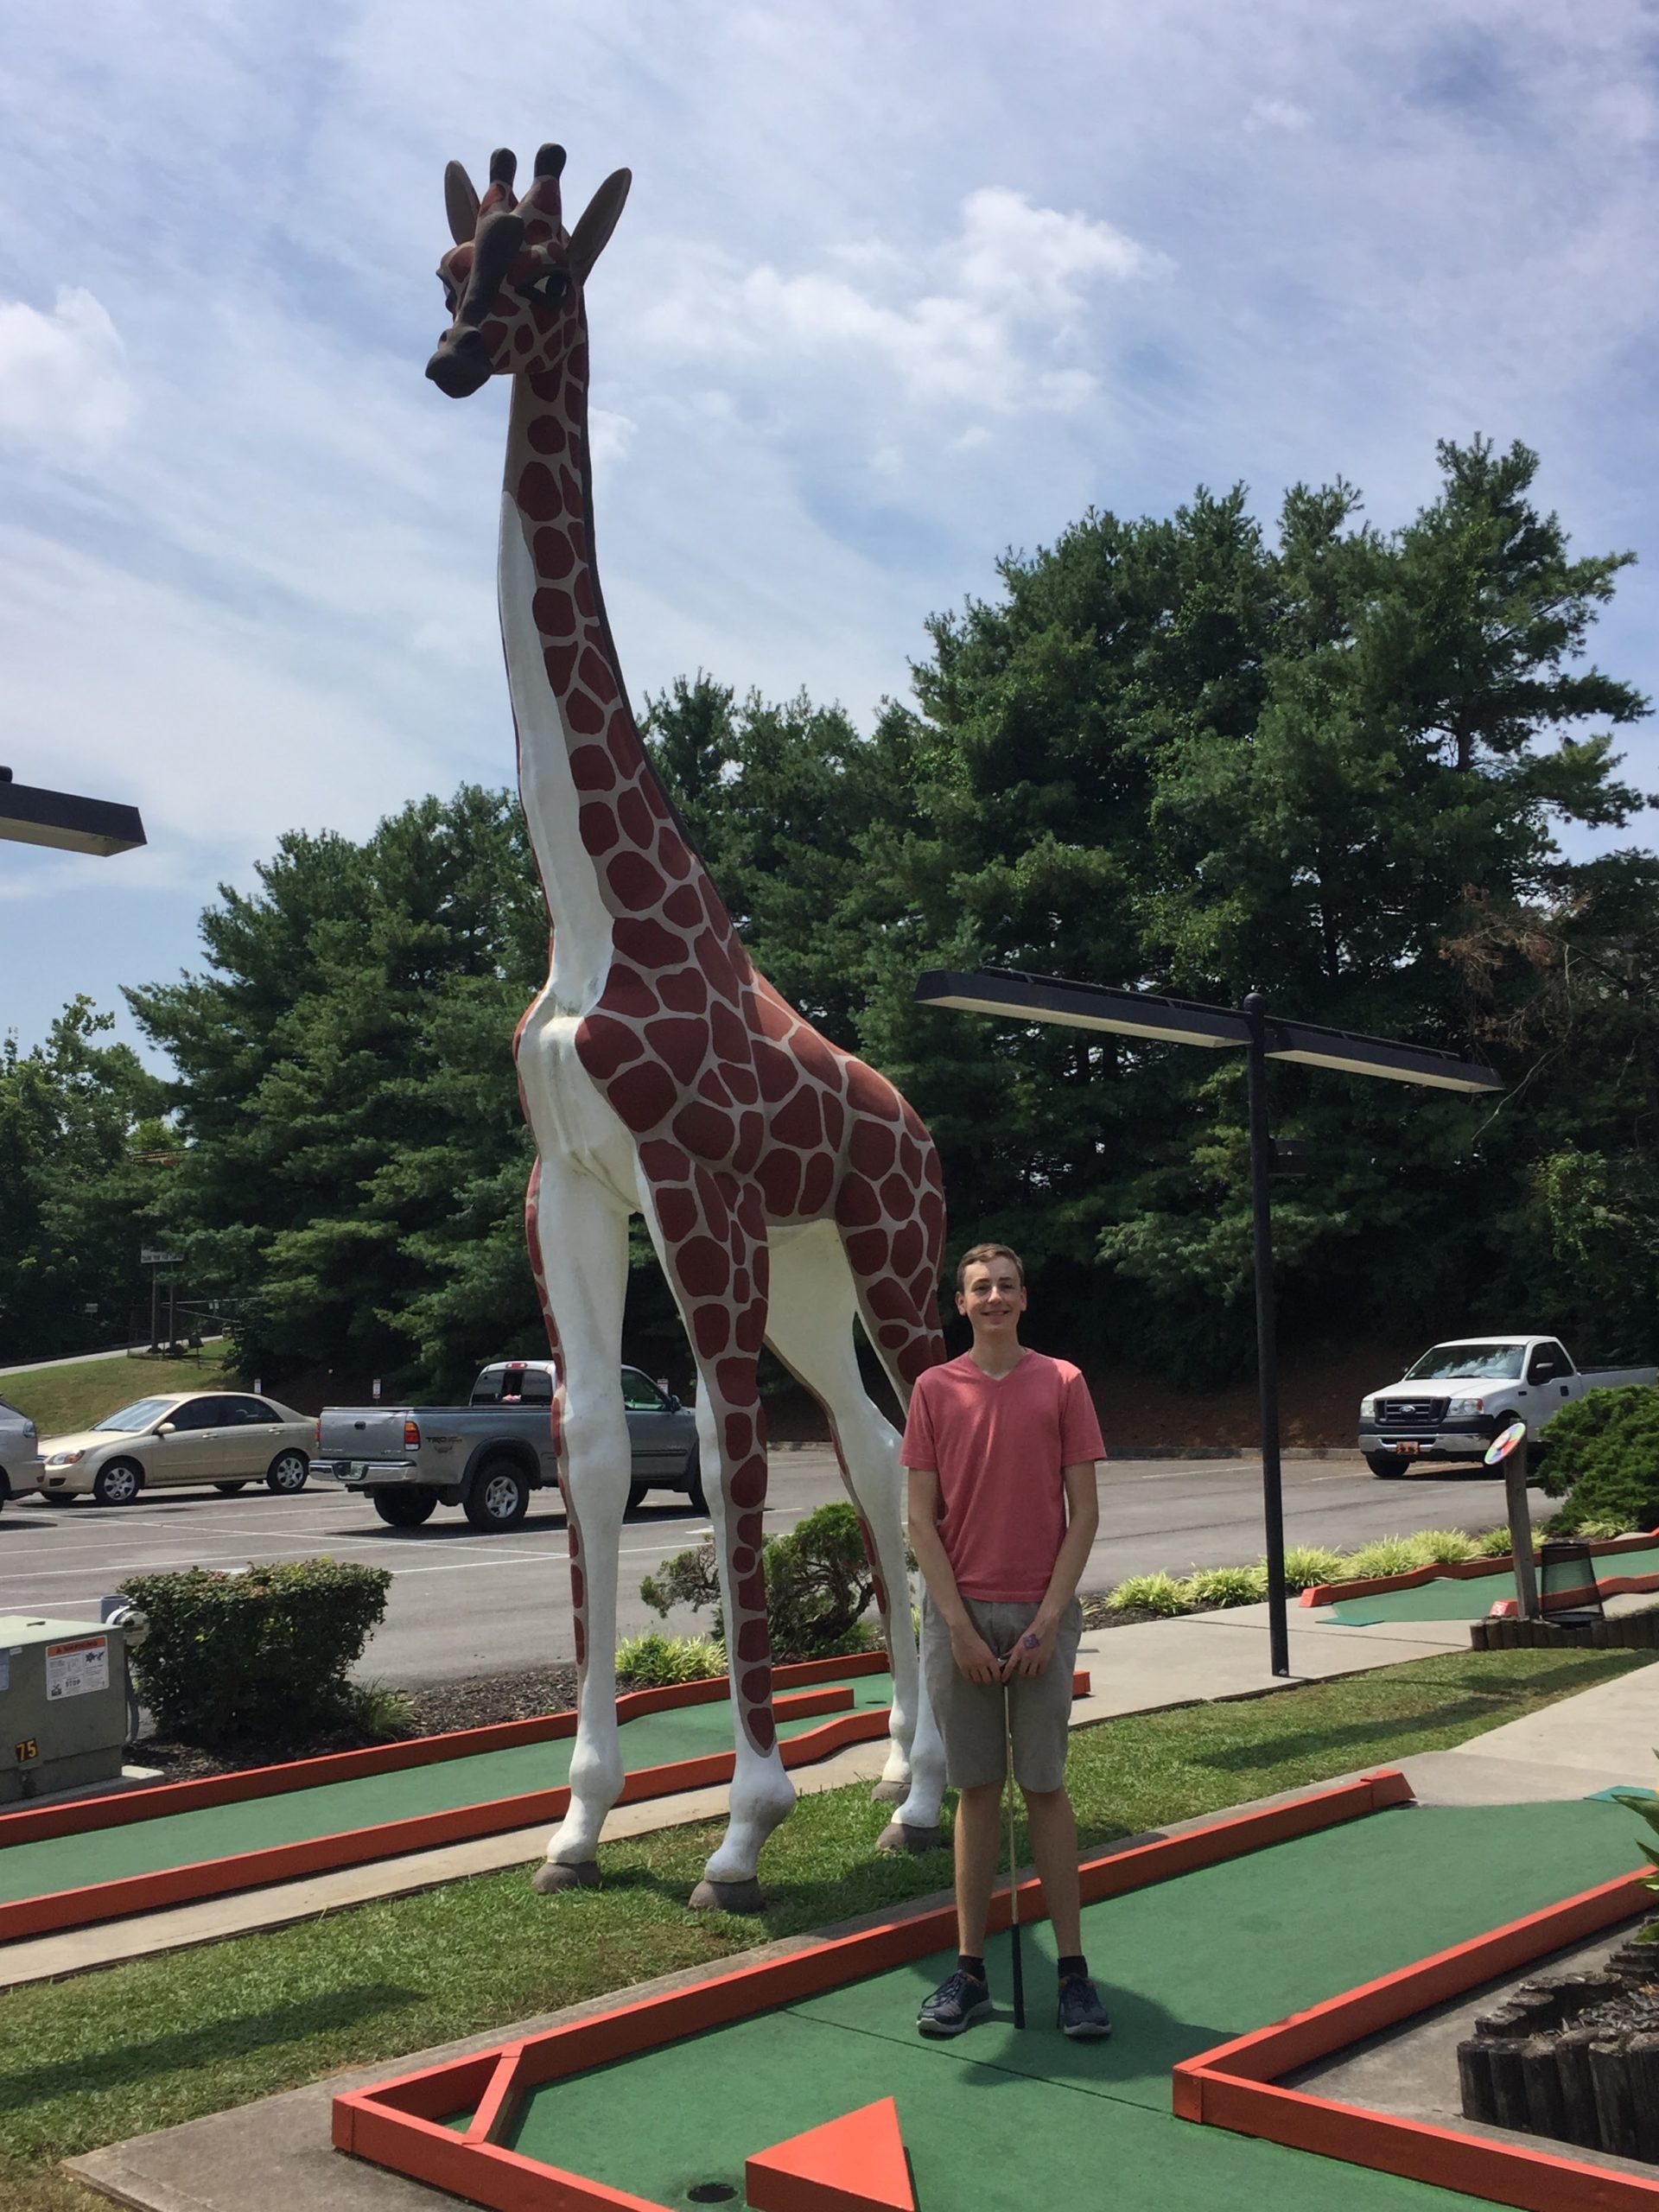 Zachary posing next to his giraffe dad